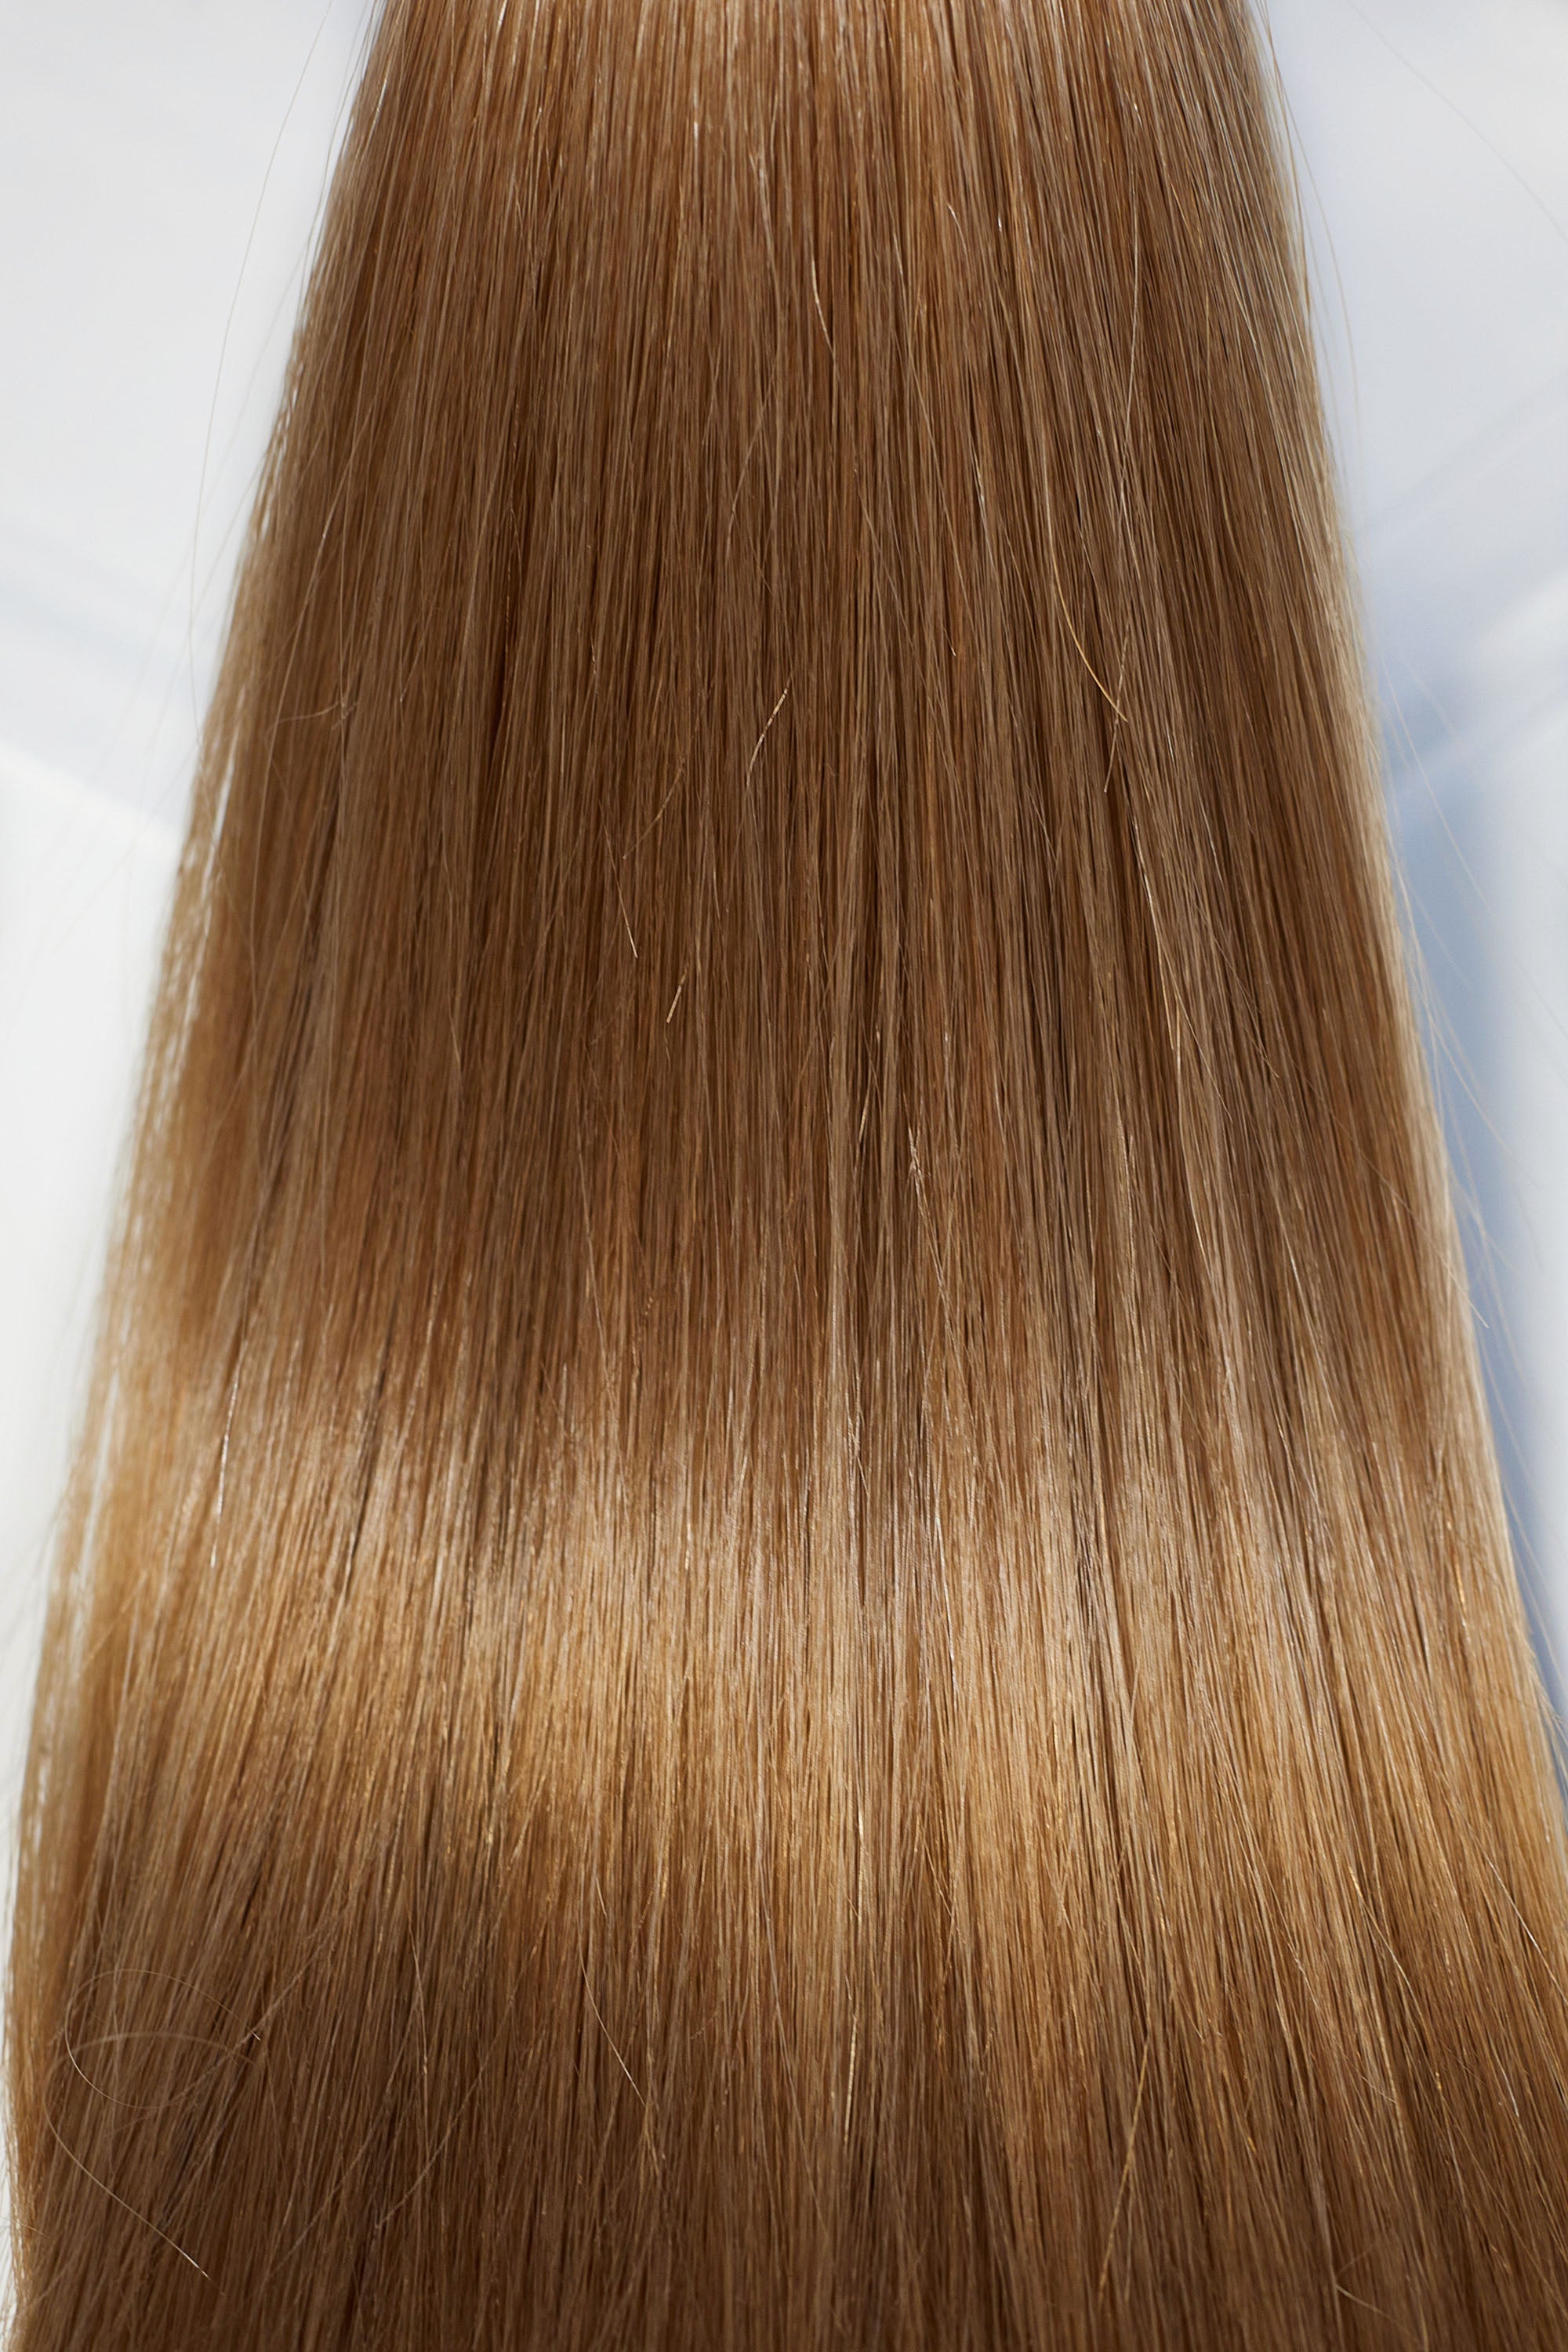 Behair professional Keratin Tip "Premium" 16" (40cm) Natural Straight Caramel Brown #8 - 25g (Standart - 0.7g each pcs) hair extensions